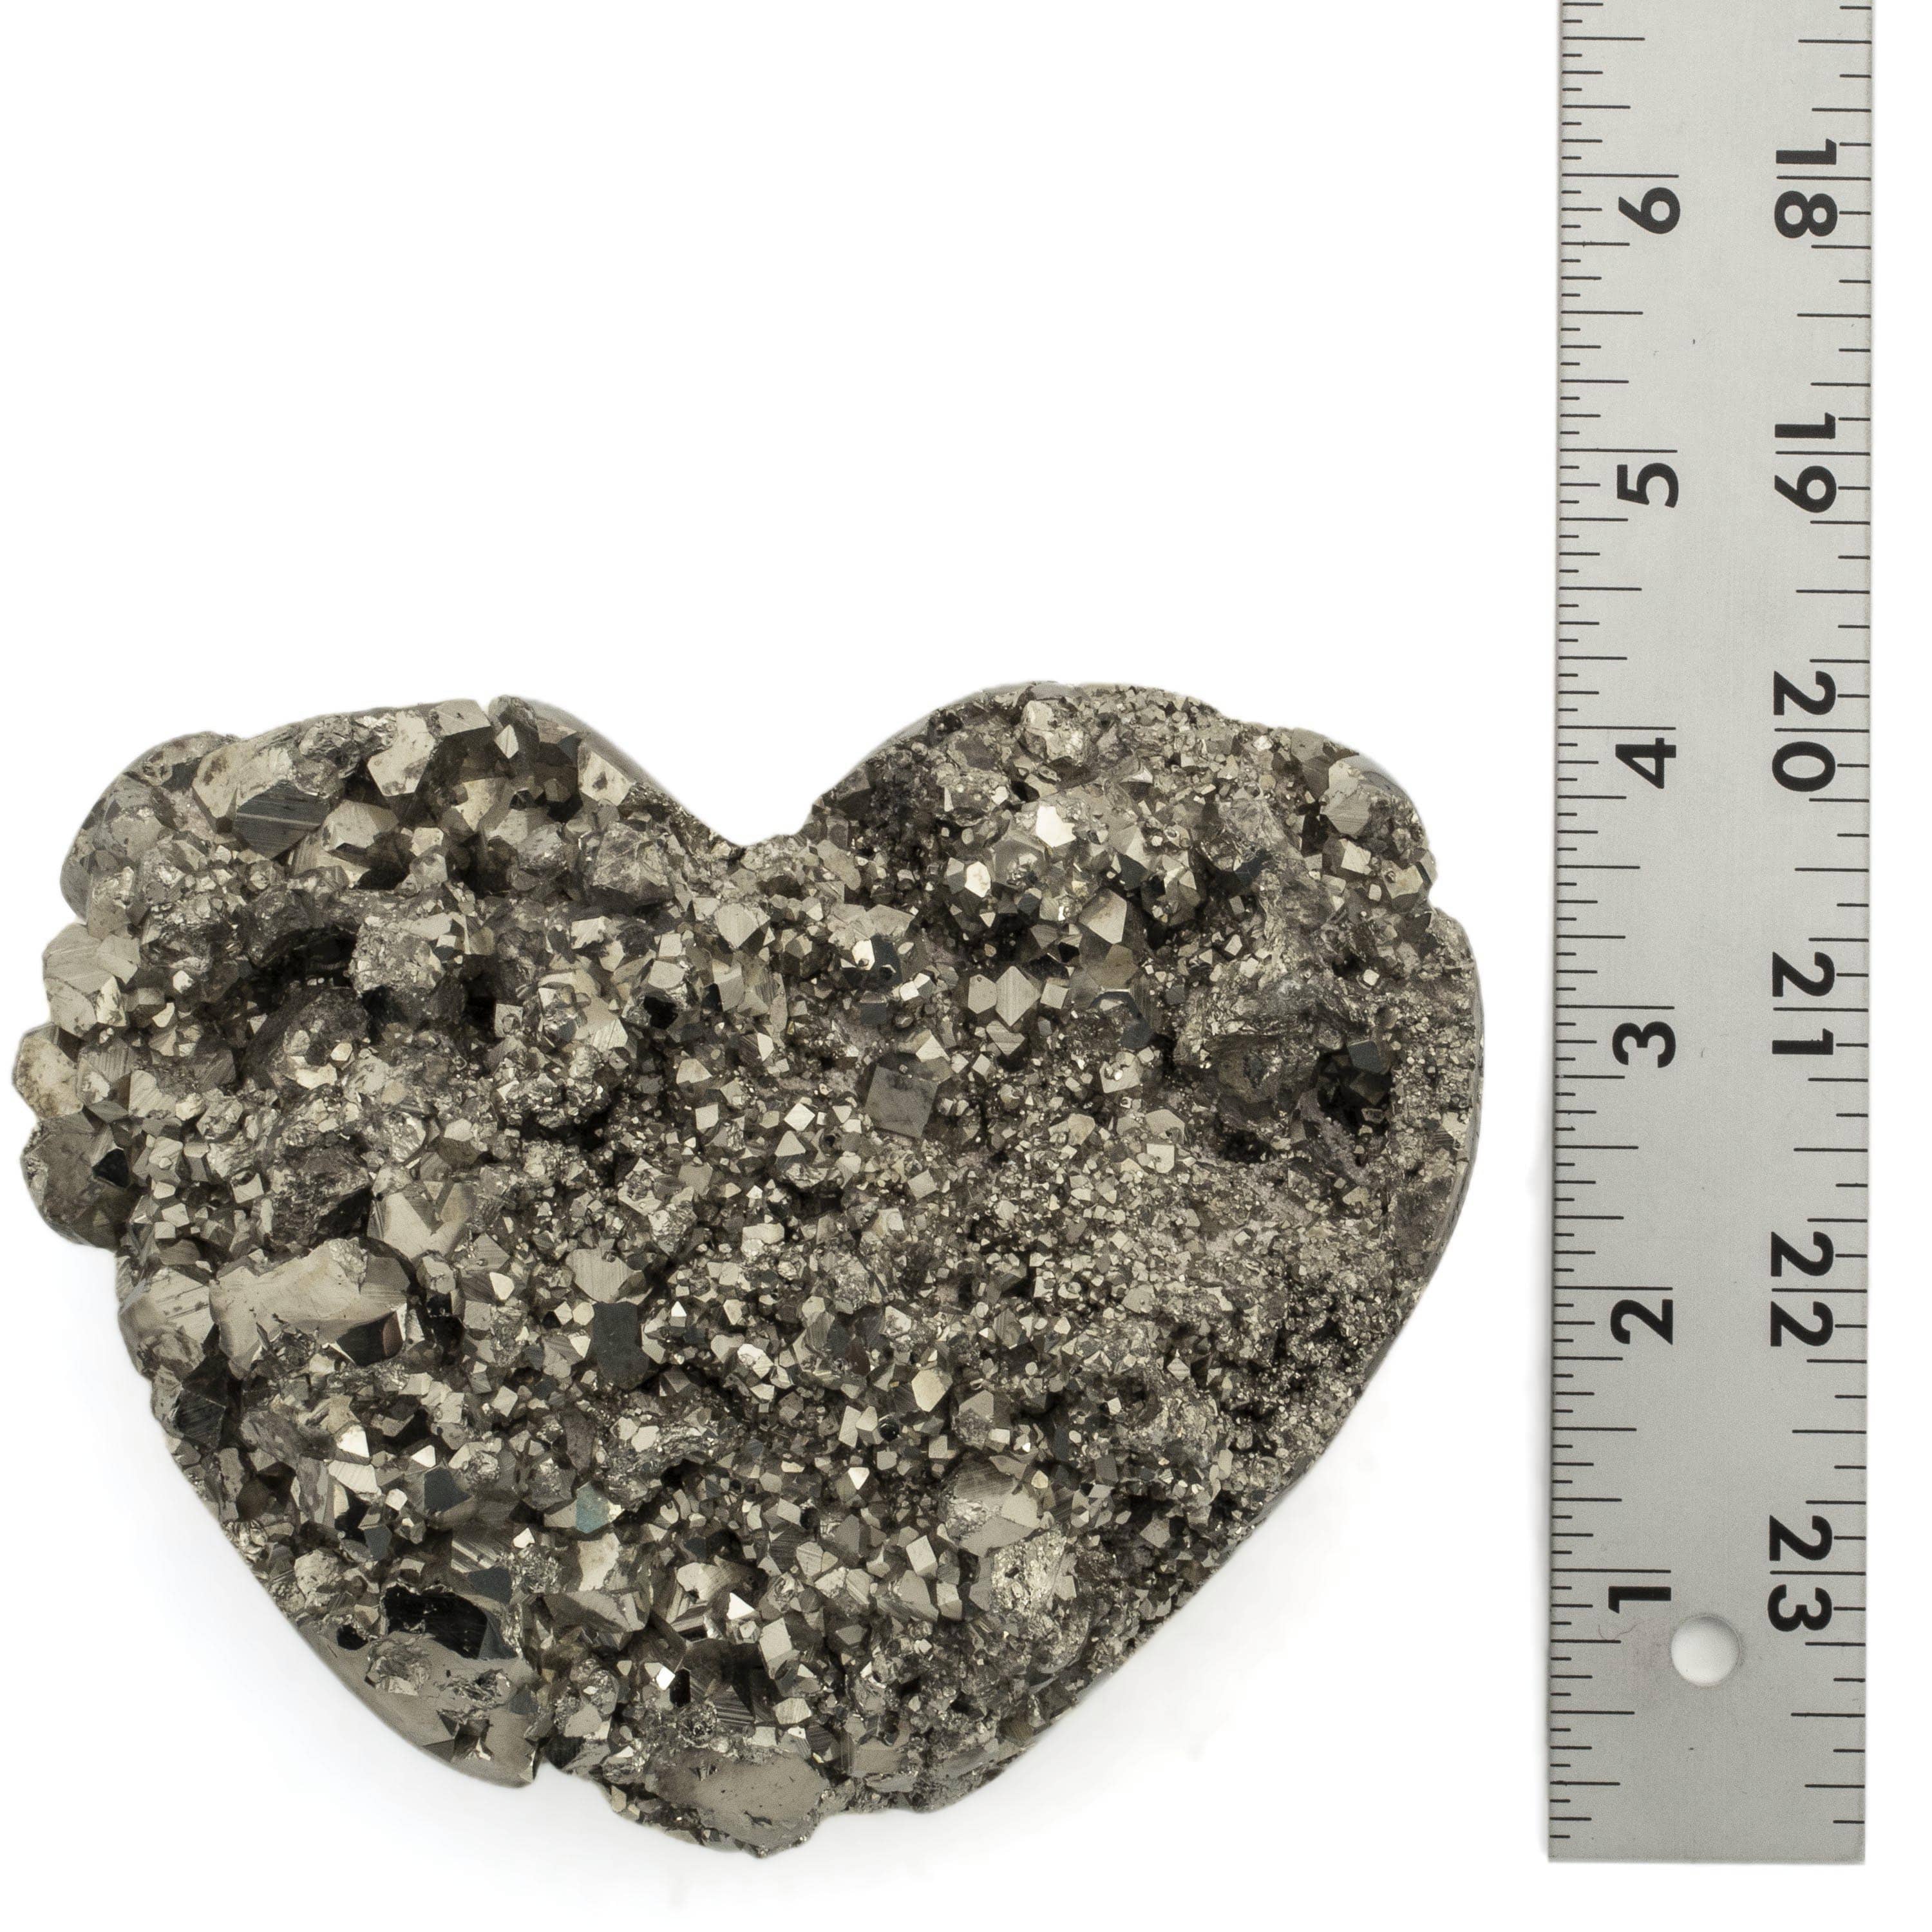 Kalifano Pyrite Pyrite Heart Carving 5" / 1,370 grams GH1600-PC.001